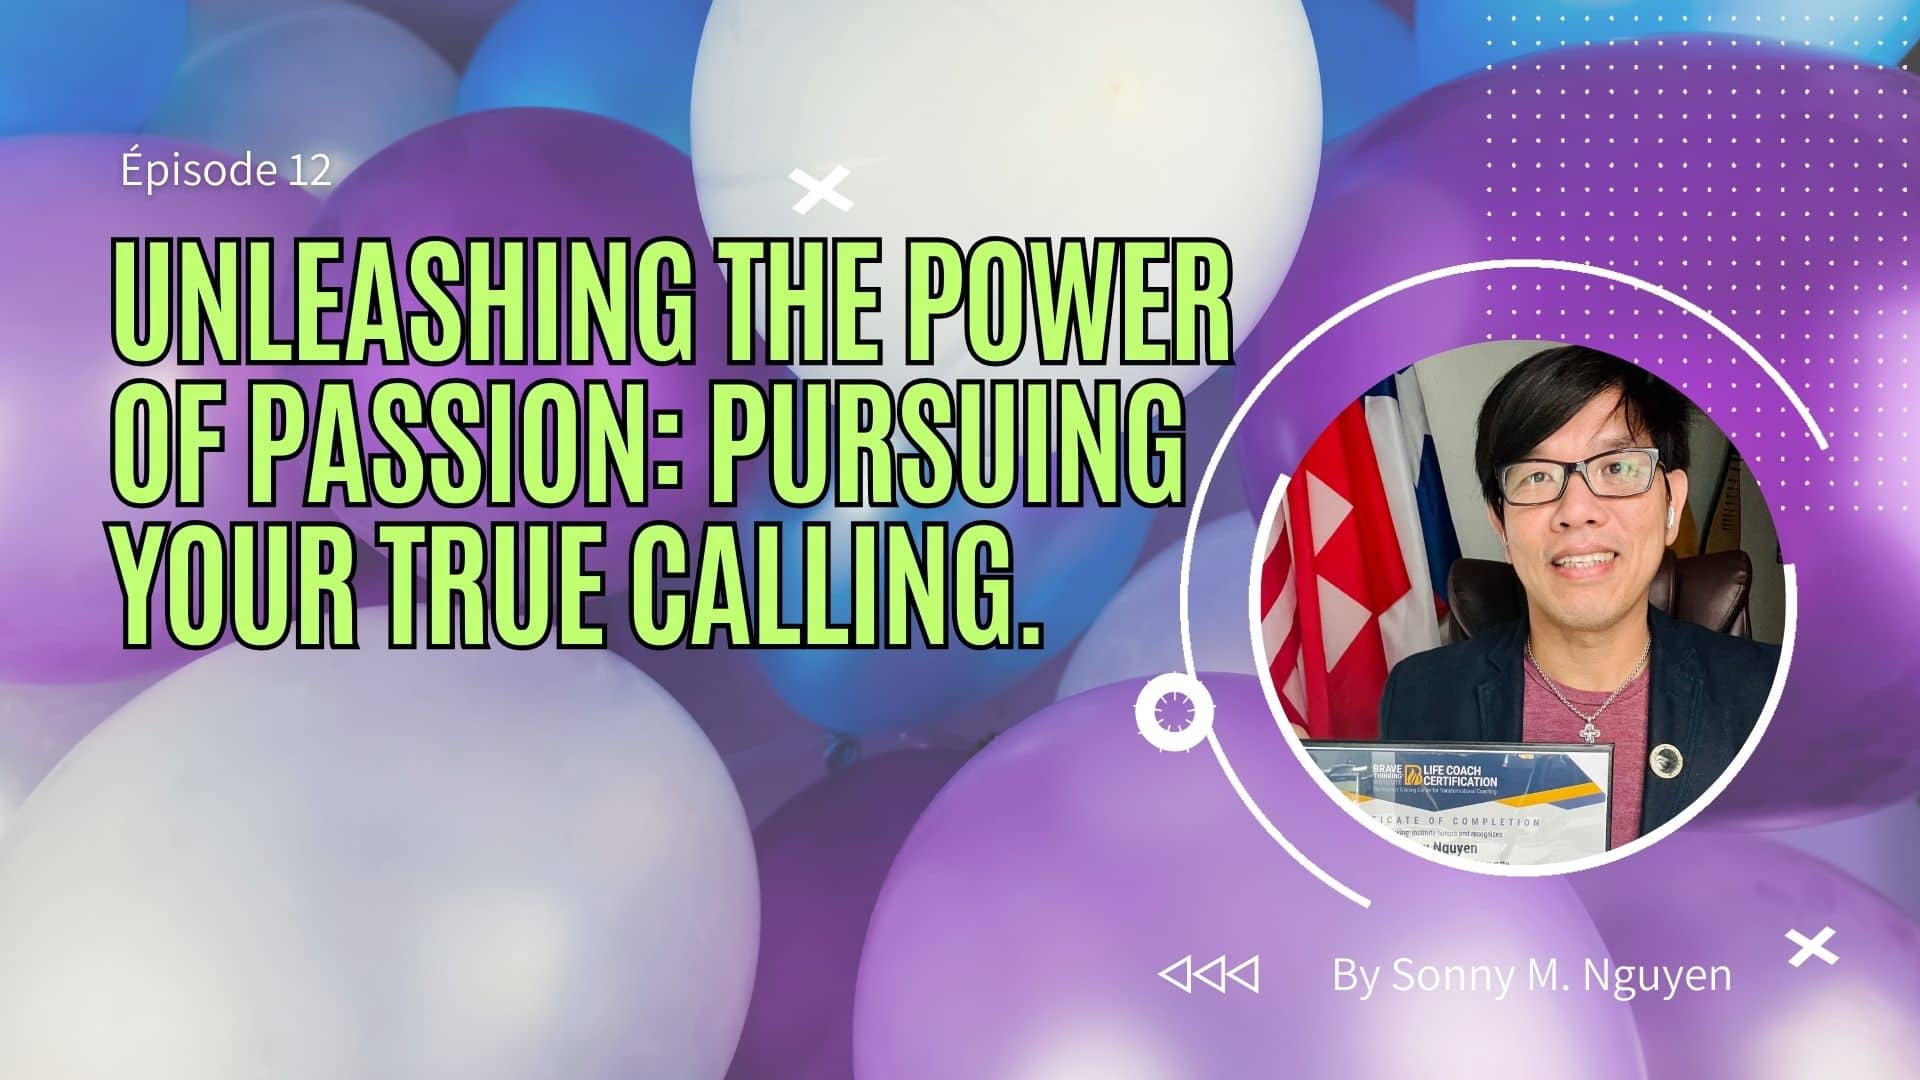 Épisode 12 | Unleashing the Power of Passion: Pursuing Your True Calling